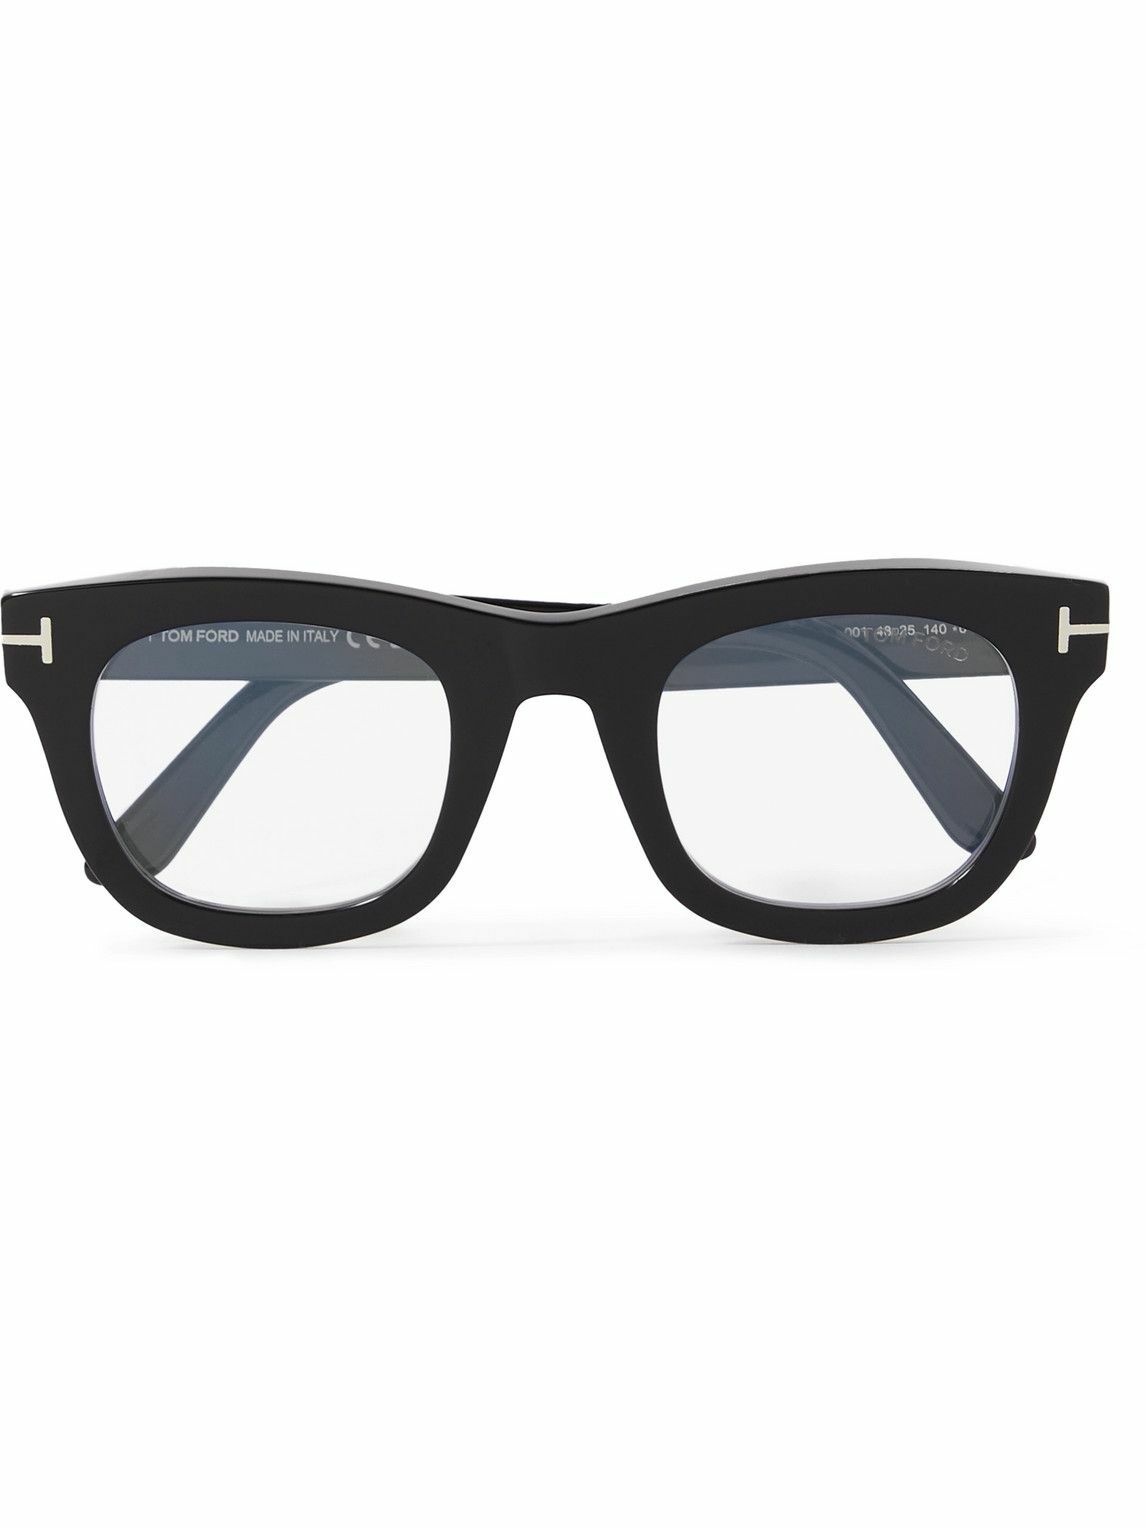 TOM FORD - Square-Frame Acetate Optical Glasses TOM FORD